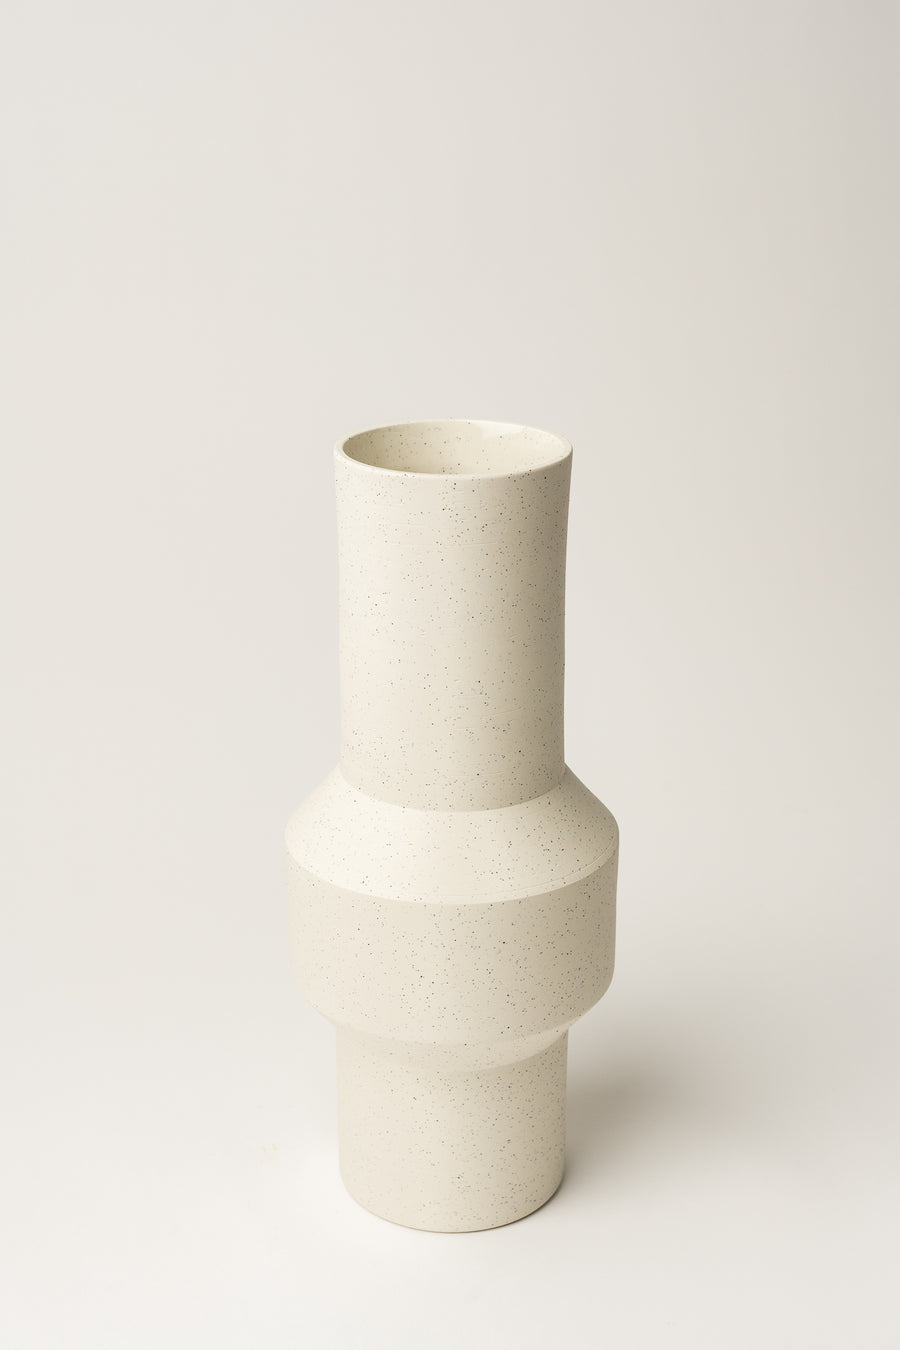 Monk Vase